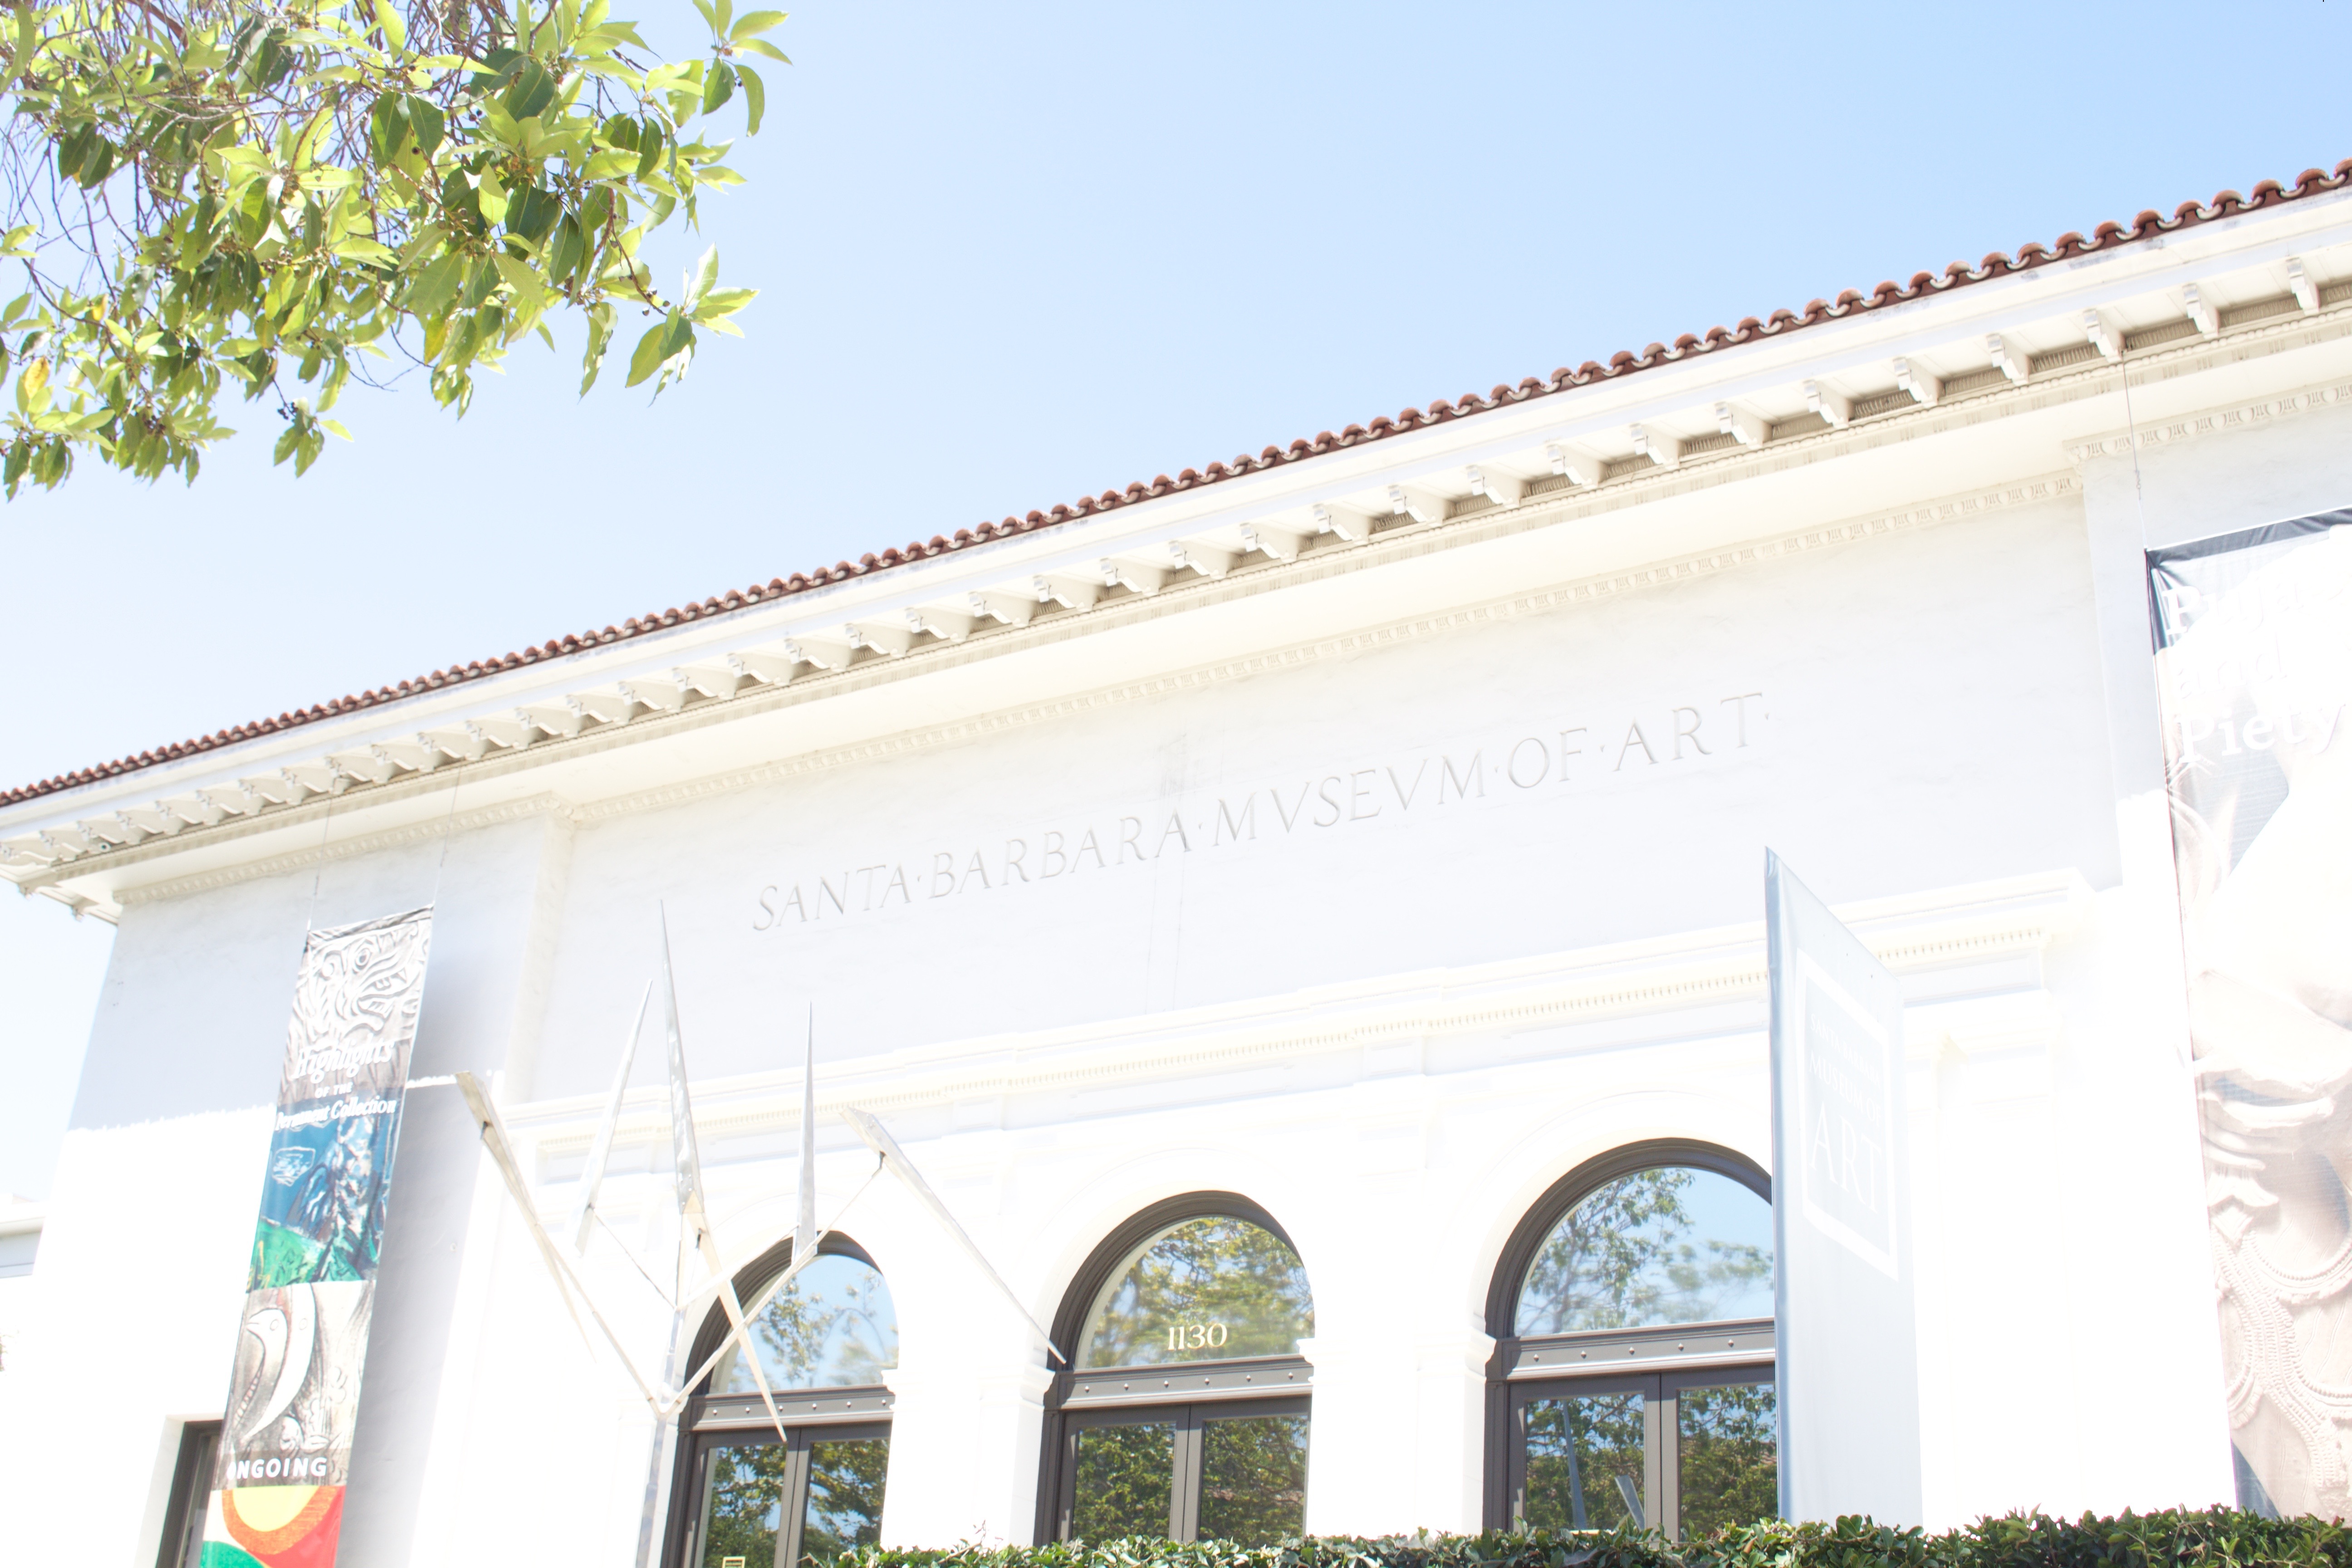 Santa Barbara Museum of Art - My Styled Life